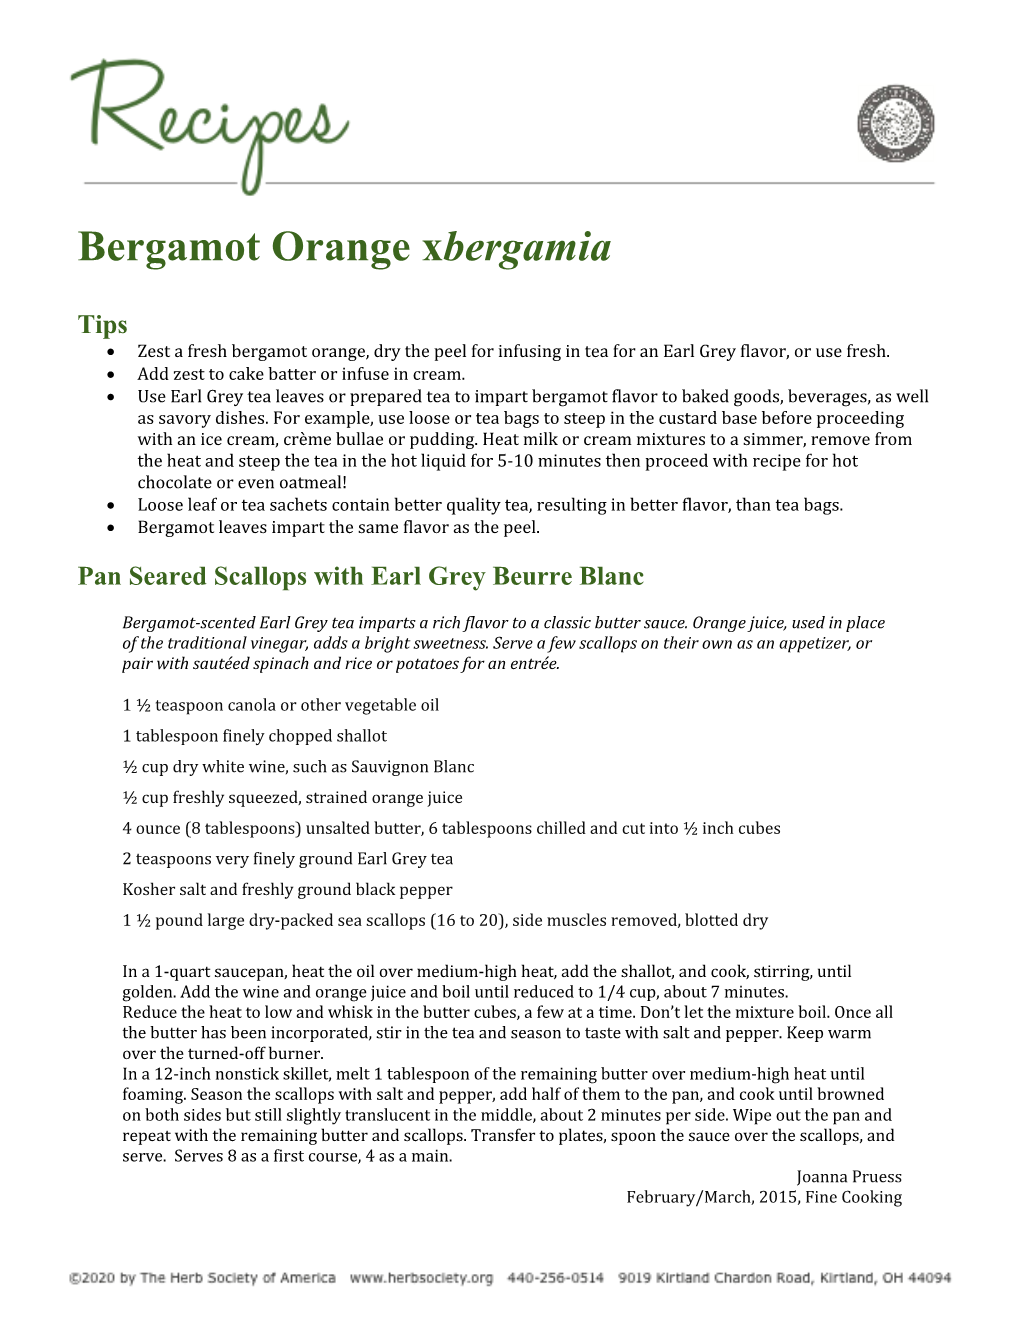 Bergamot Orange Recipes